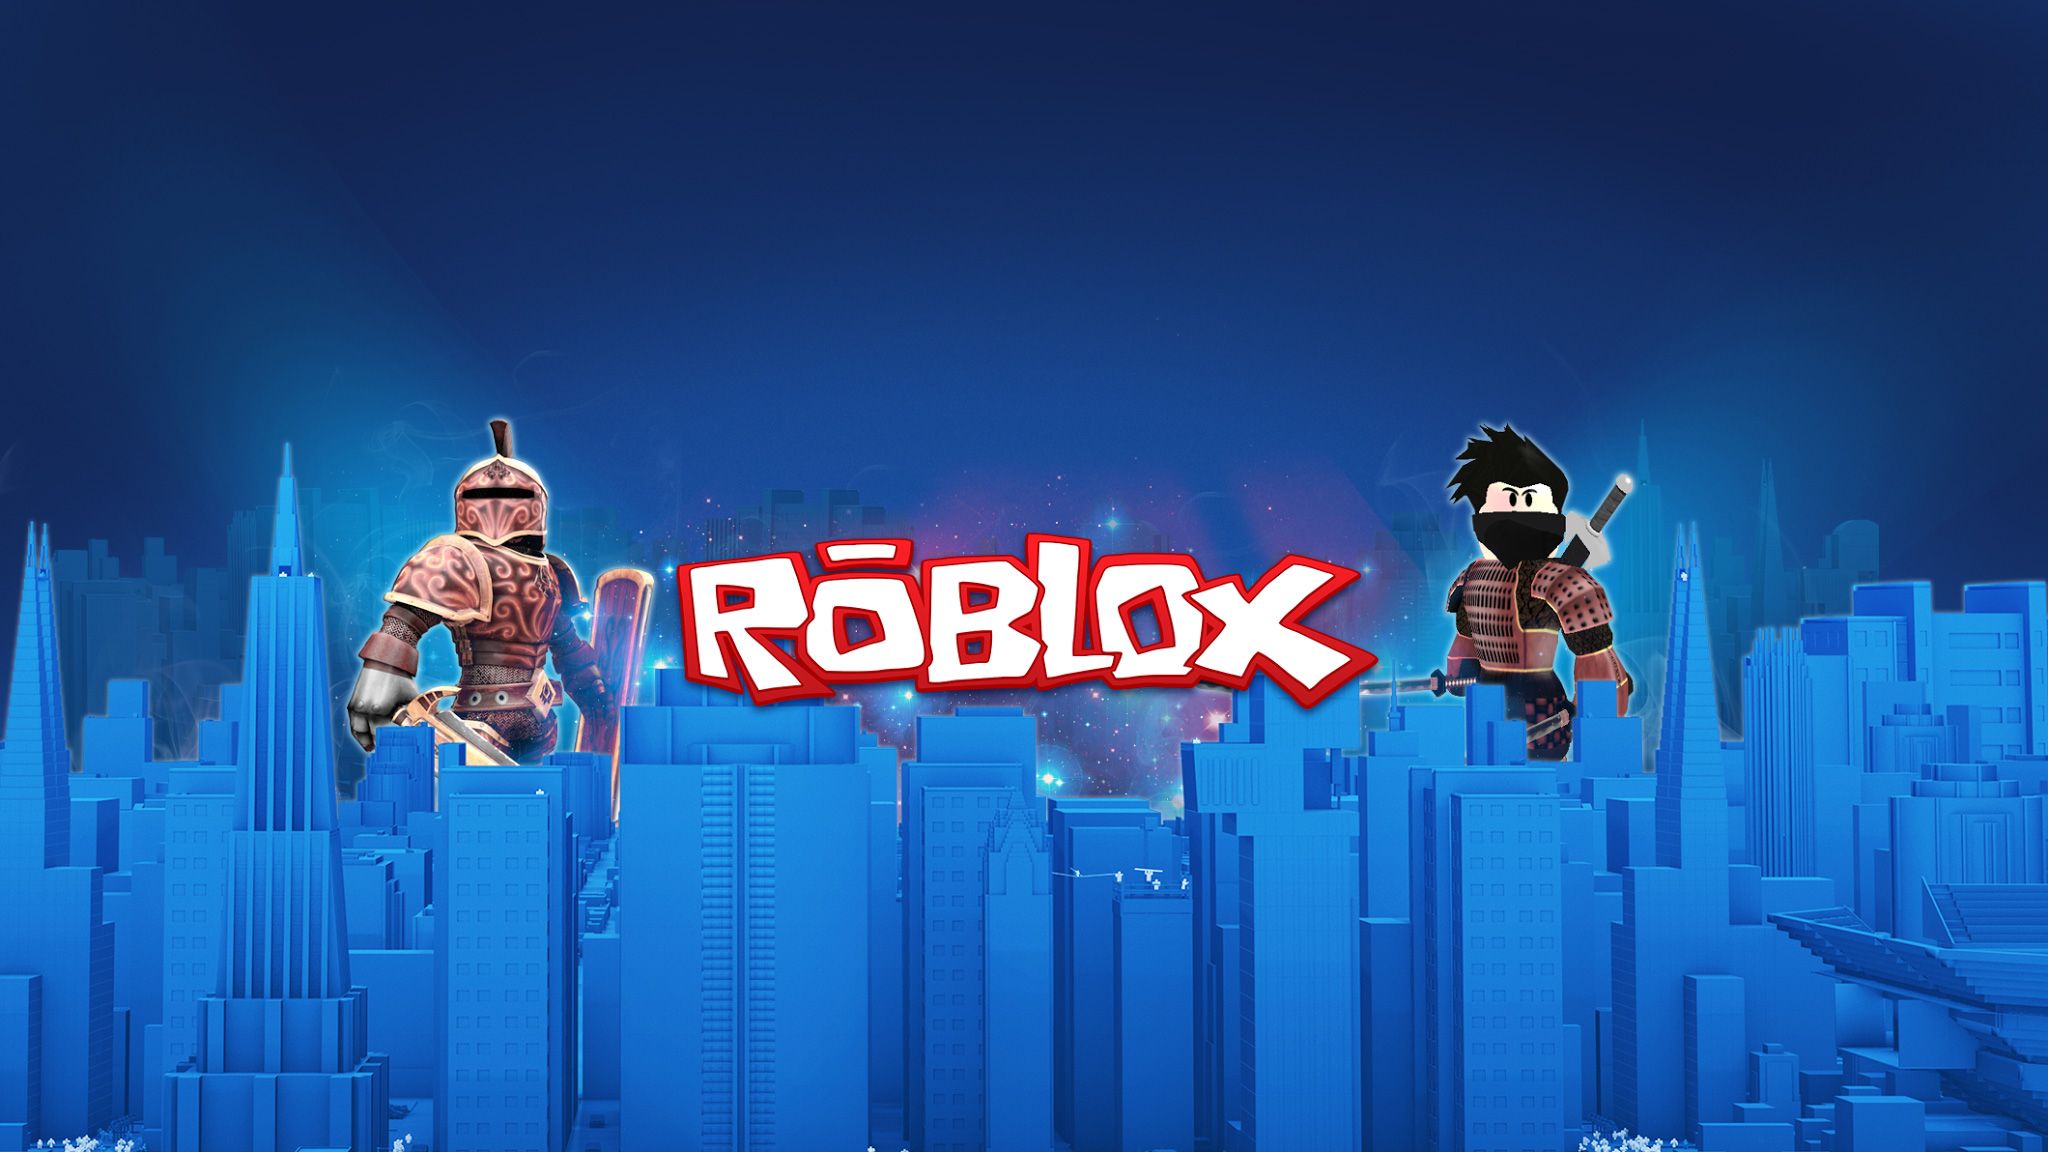 Roblox Wallpaper for My Desktop on .wallpaperafari.com